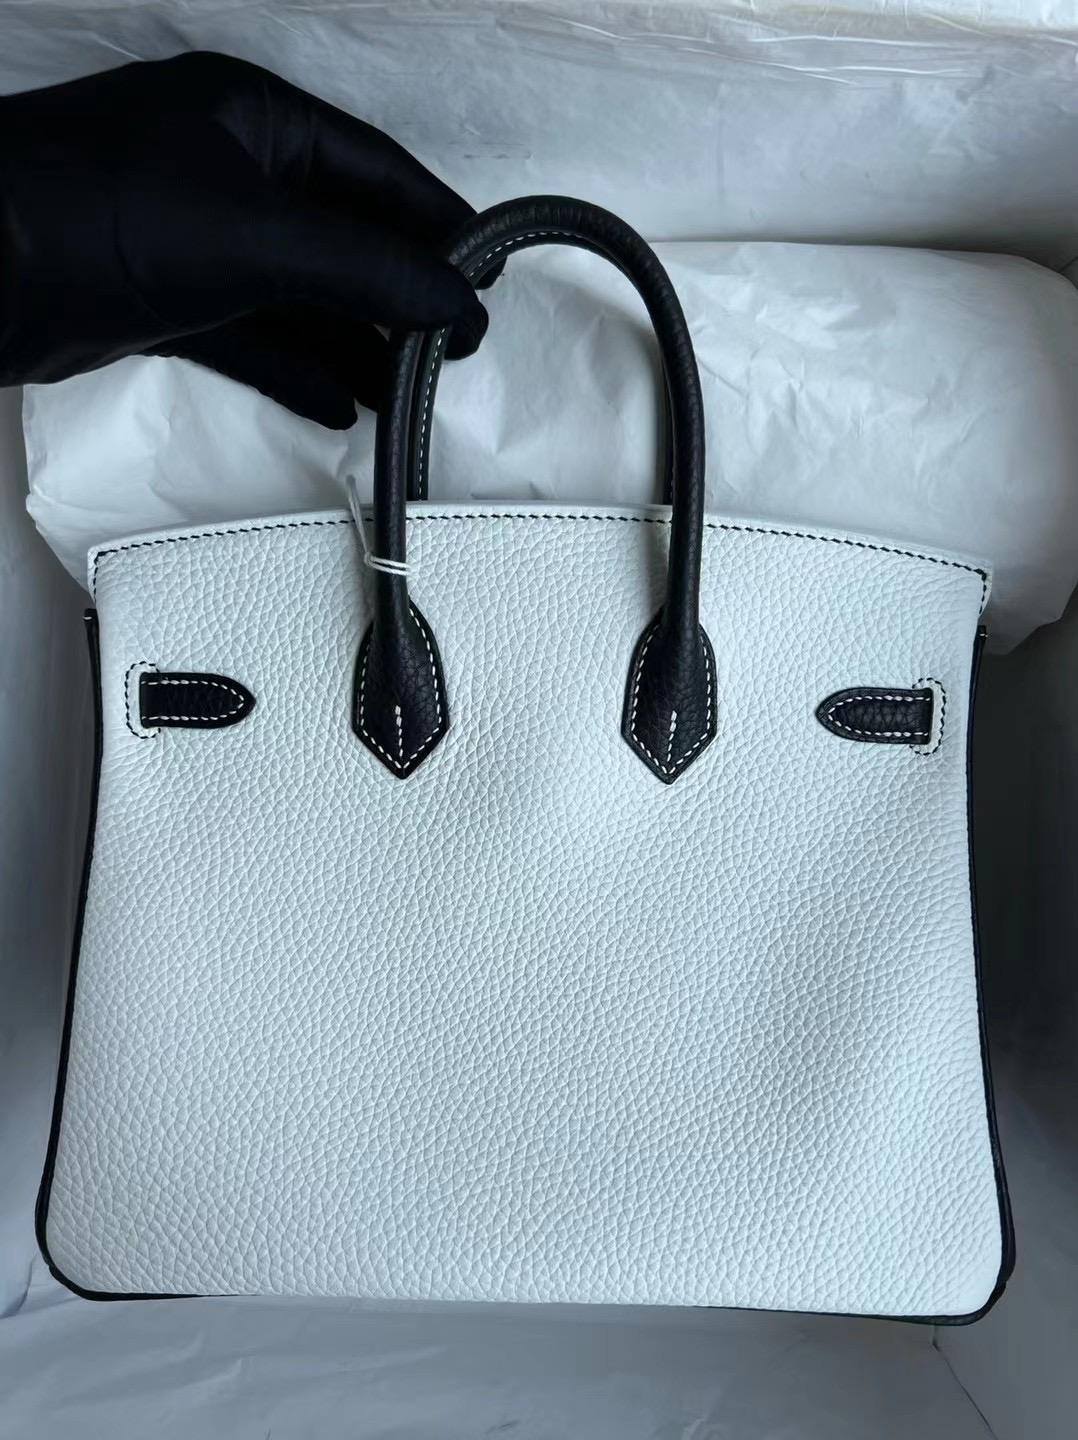 Hermès Birkin 25cm HSS 黑白熊貓 01 Pure white 純白色+黑色拉絲銀扣馬蹄印